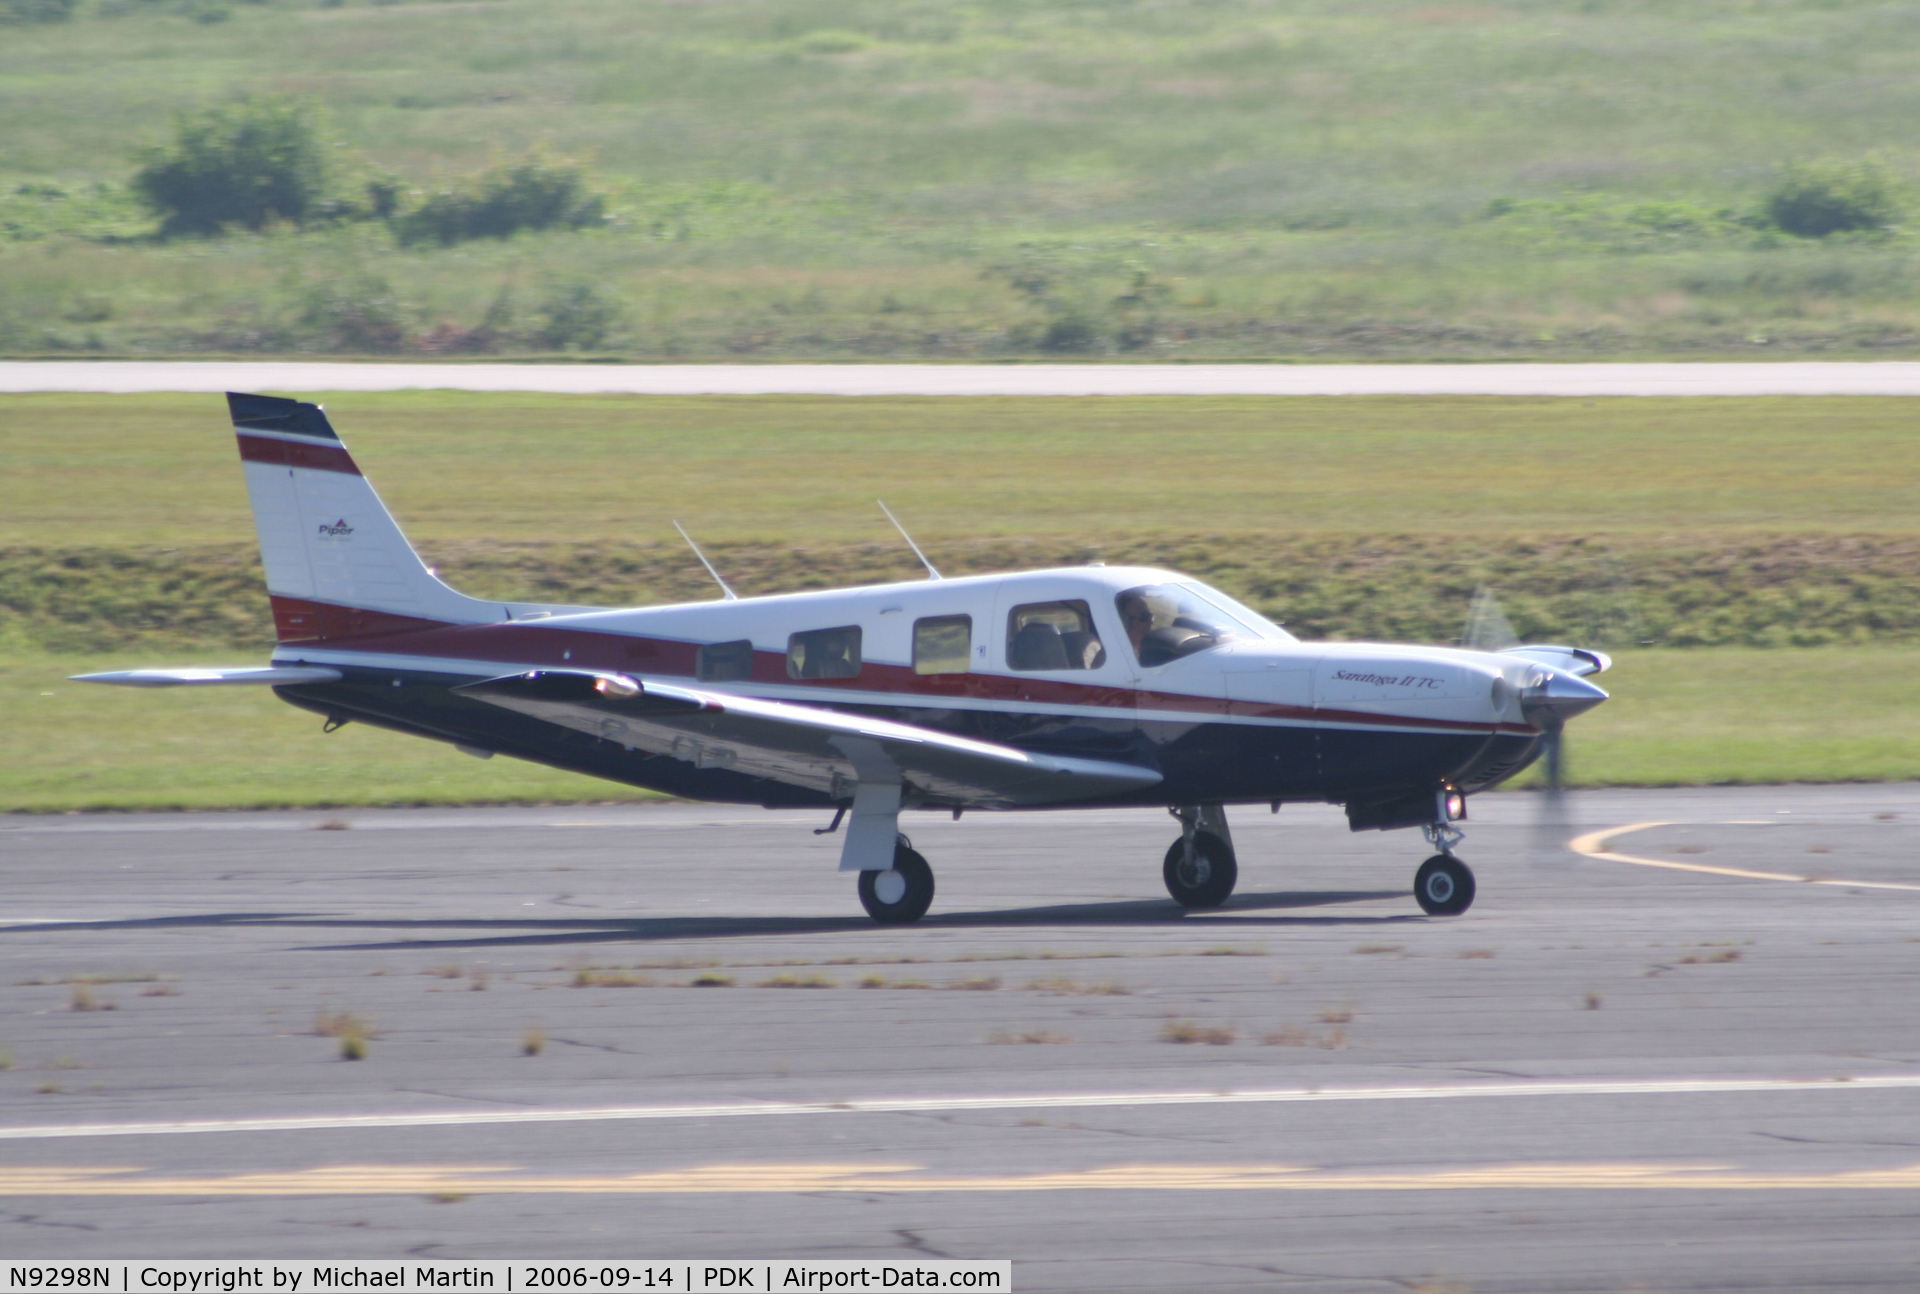 N9298N, 1997 Piper PA-32R-301T Turbo Saratoga C/N 3257005, Landing Runway 20R